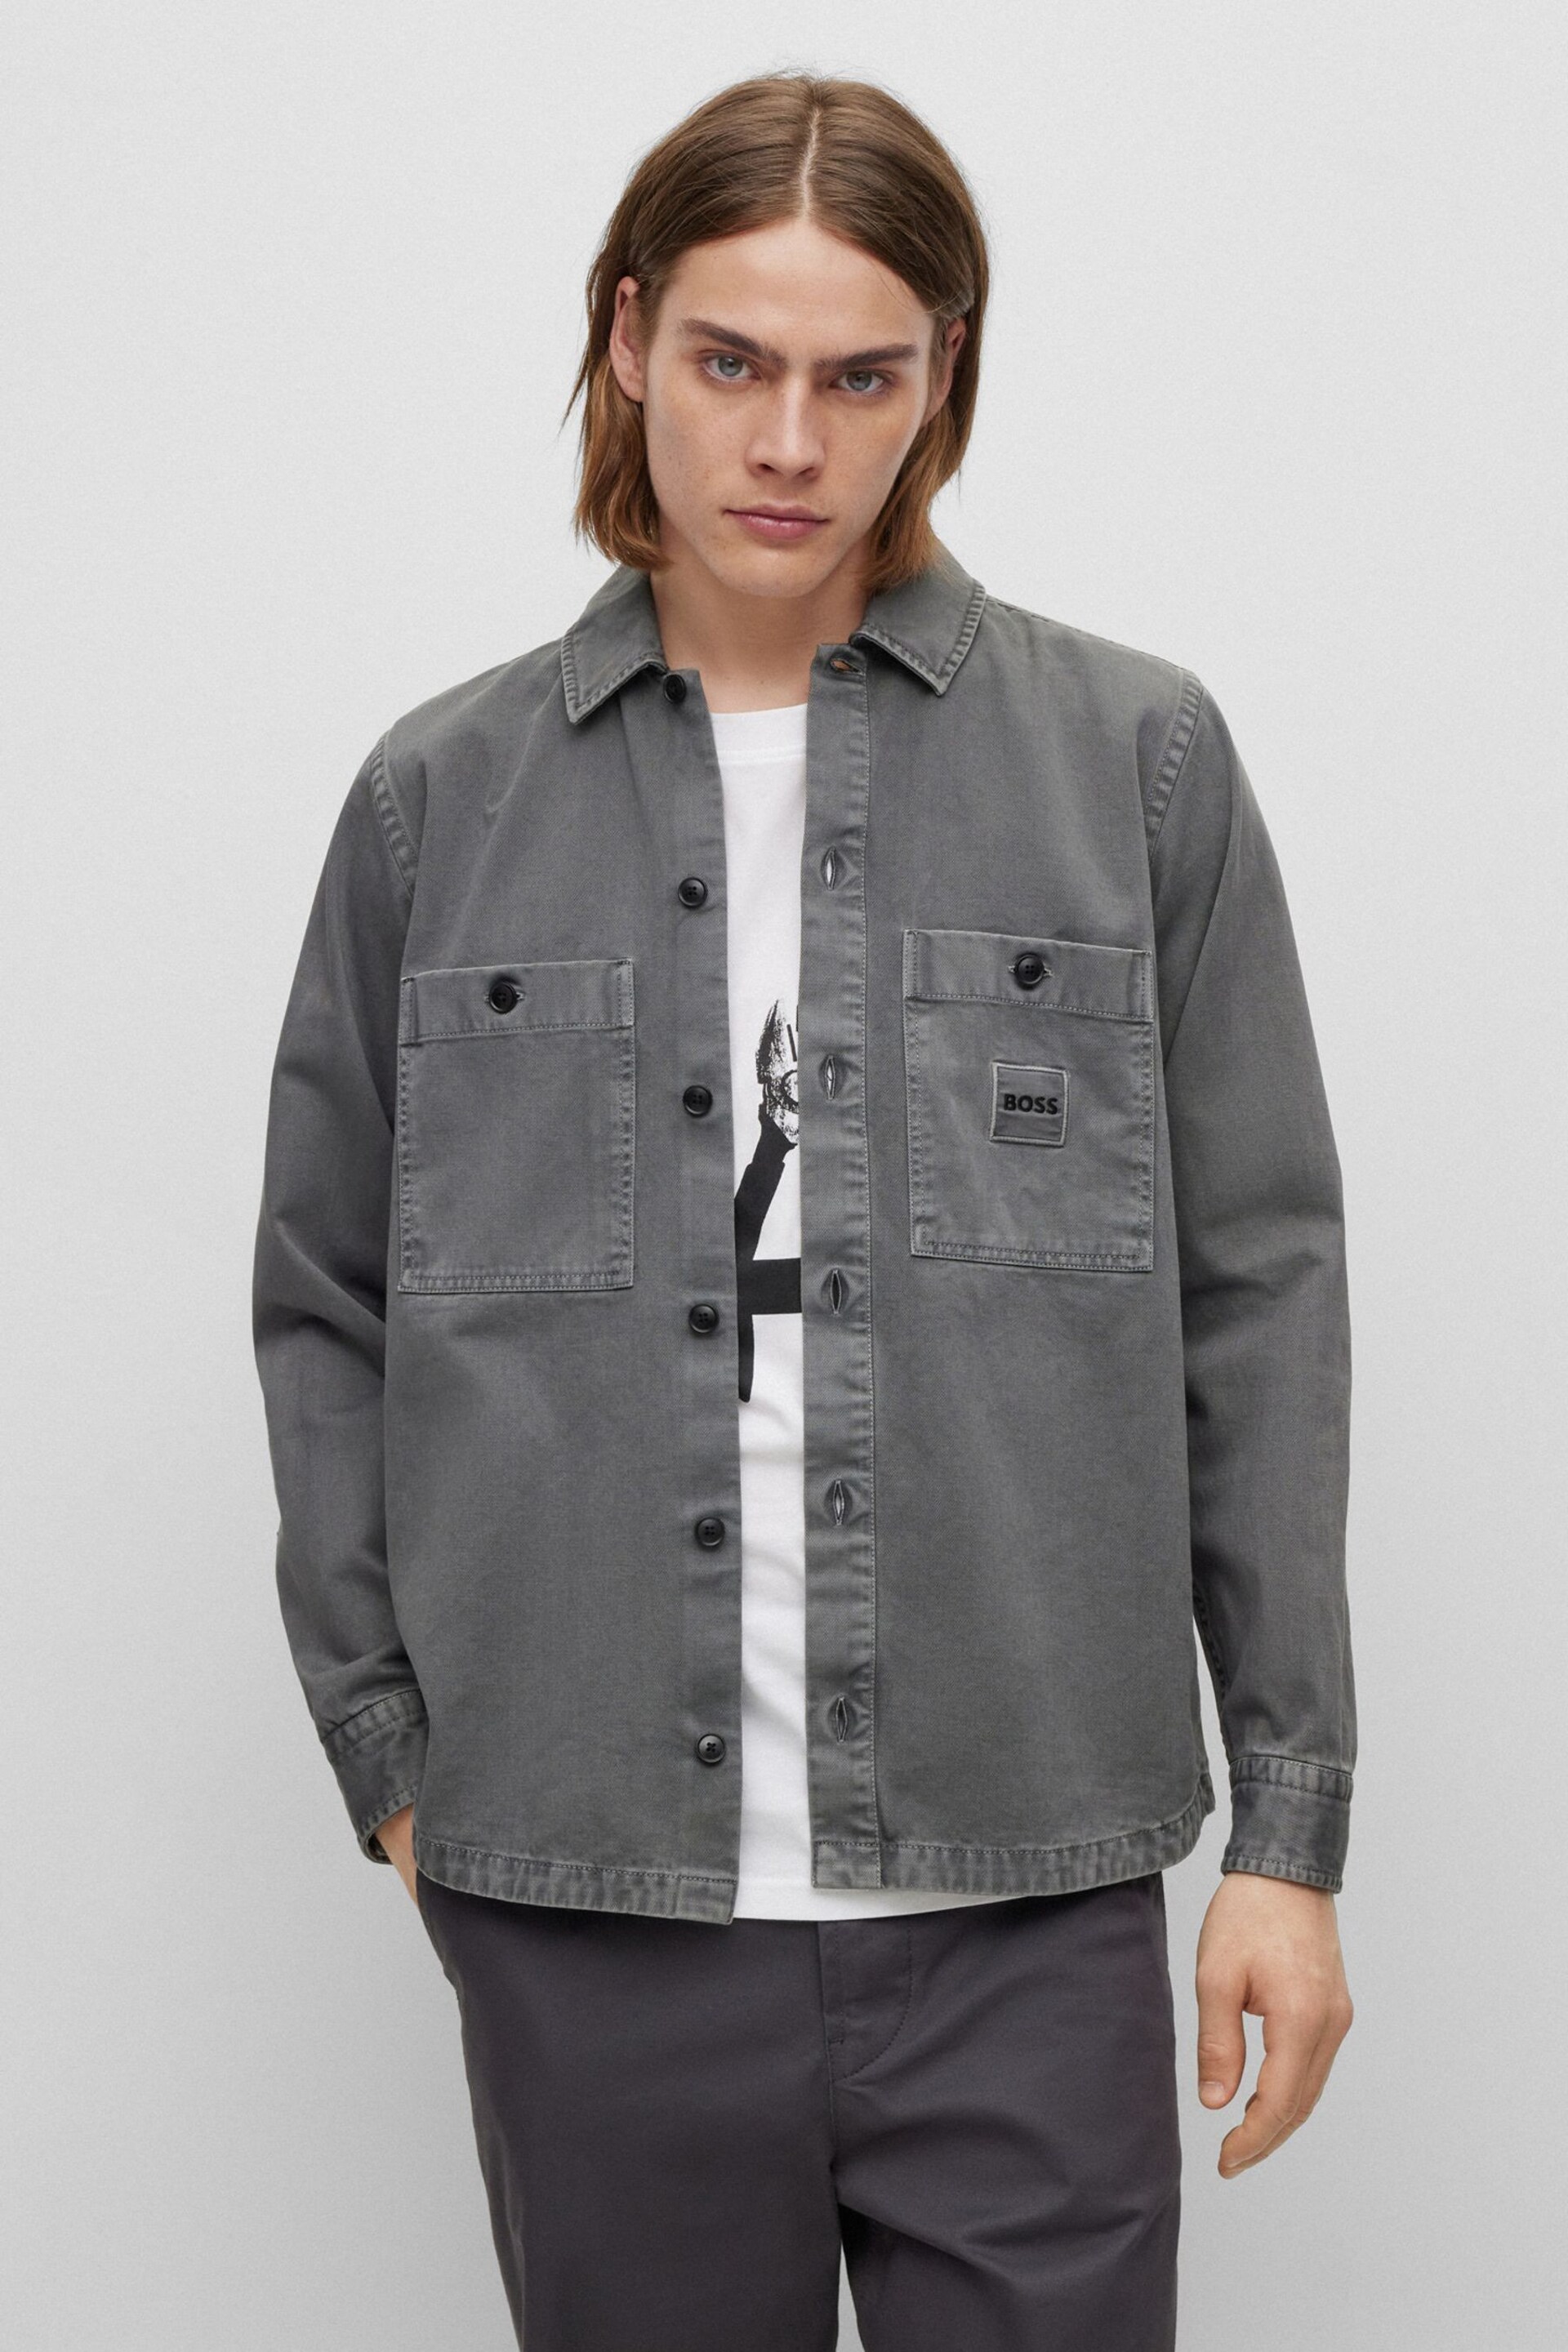 BOSS Grey Garment Dyed Twill Overshirt - Image 1 of 6